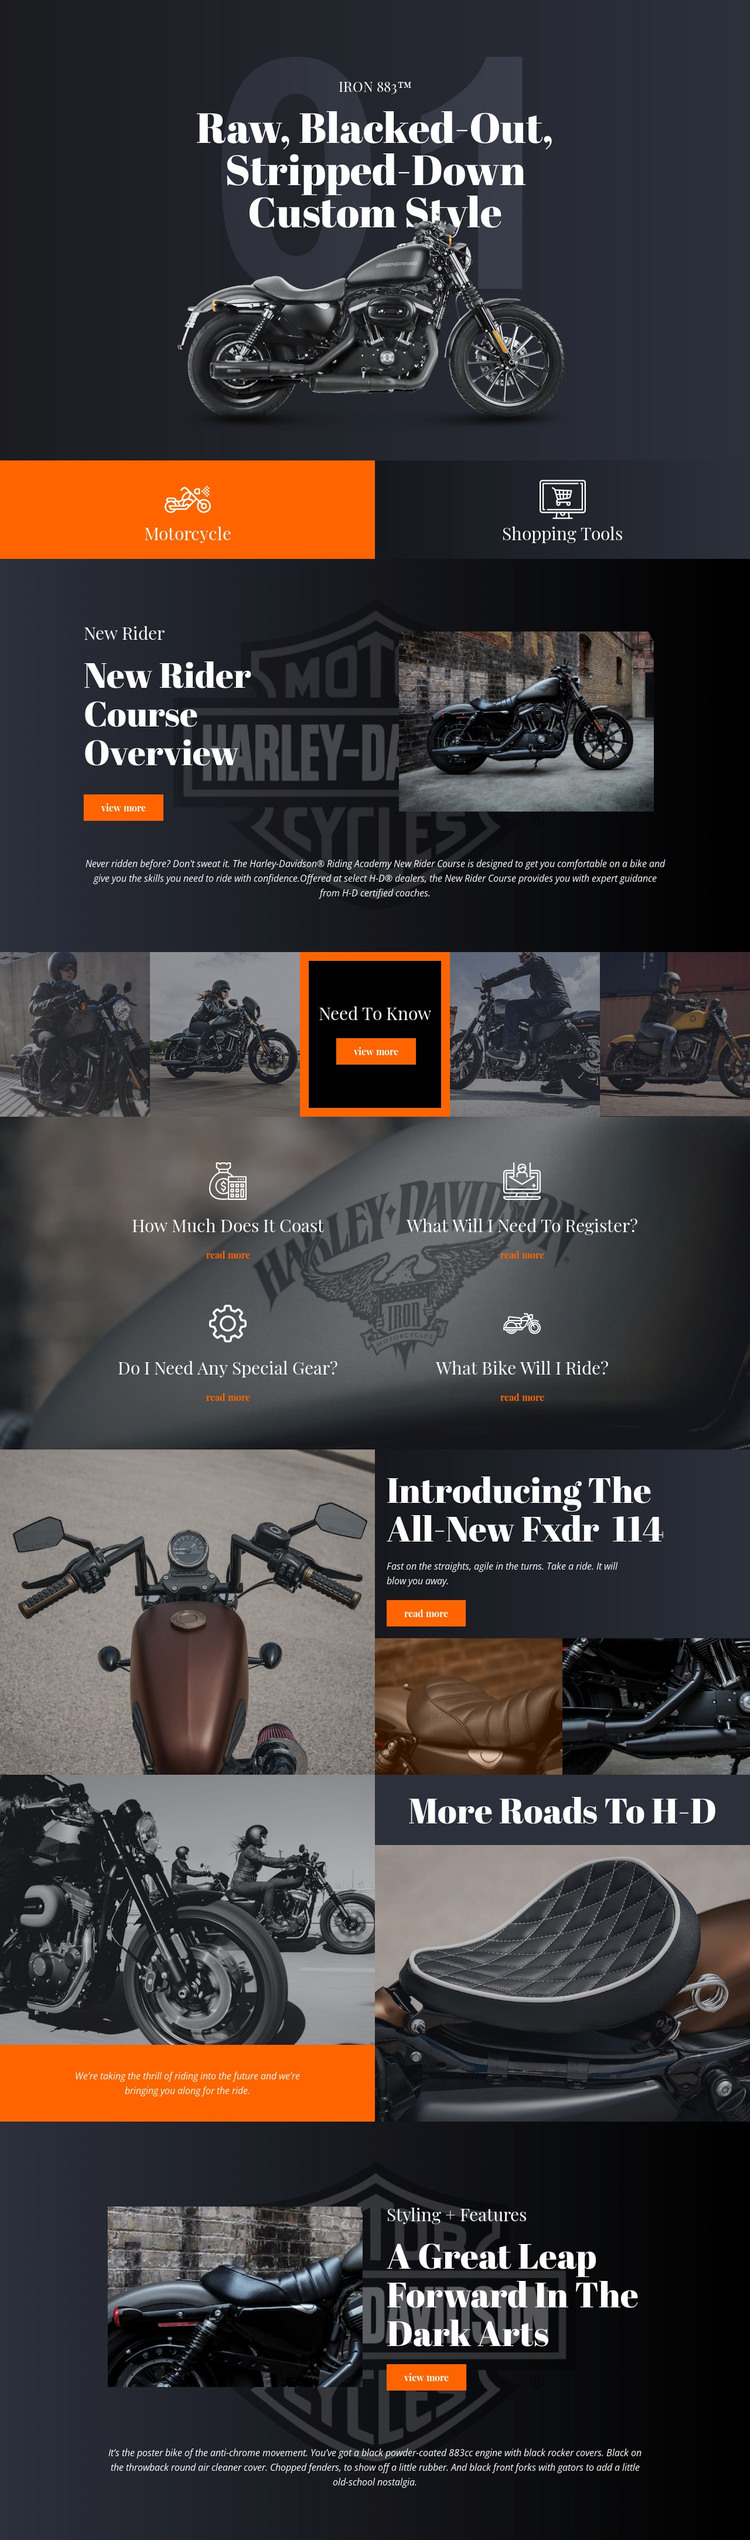 Harley Davidson WordPress Theme